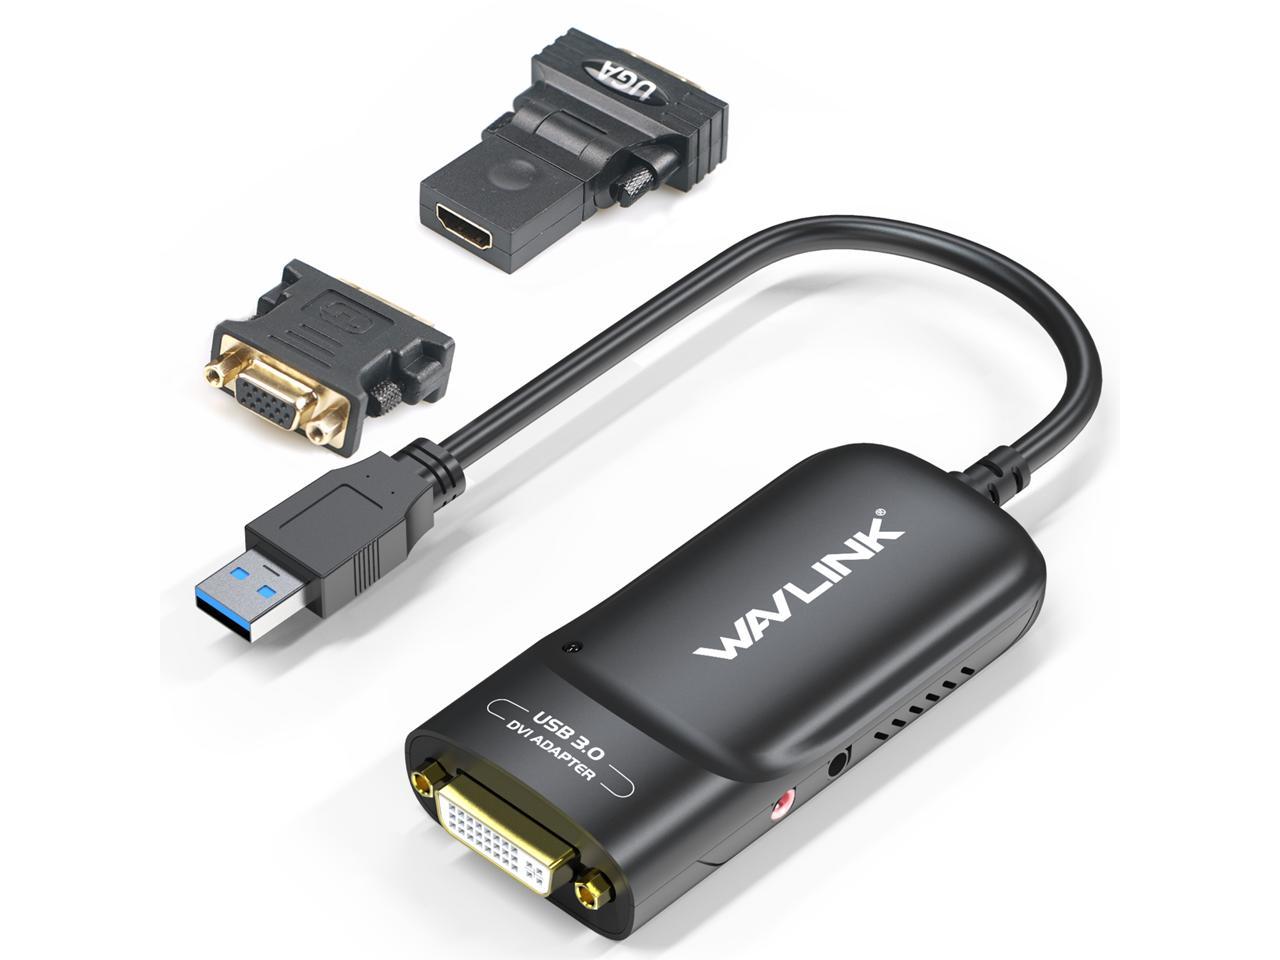 . Resolution: 1920 x 1080 Analog Video Signal Output USB 3.0 to VGA Display Adapter Black 